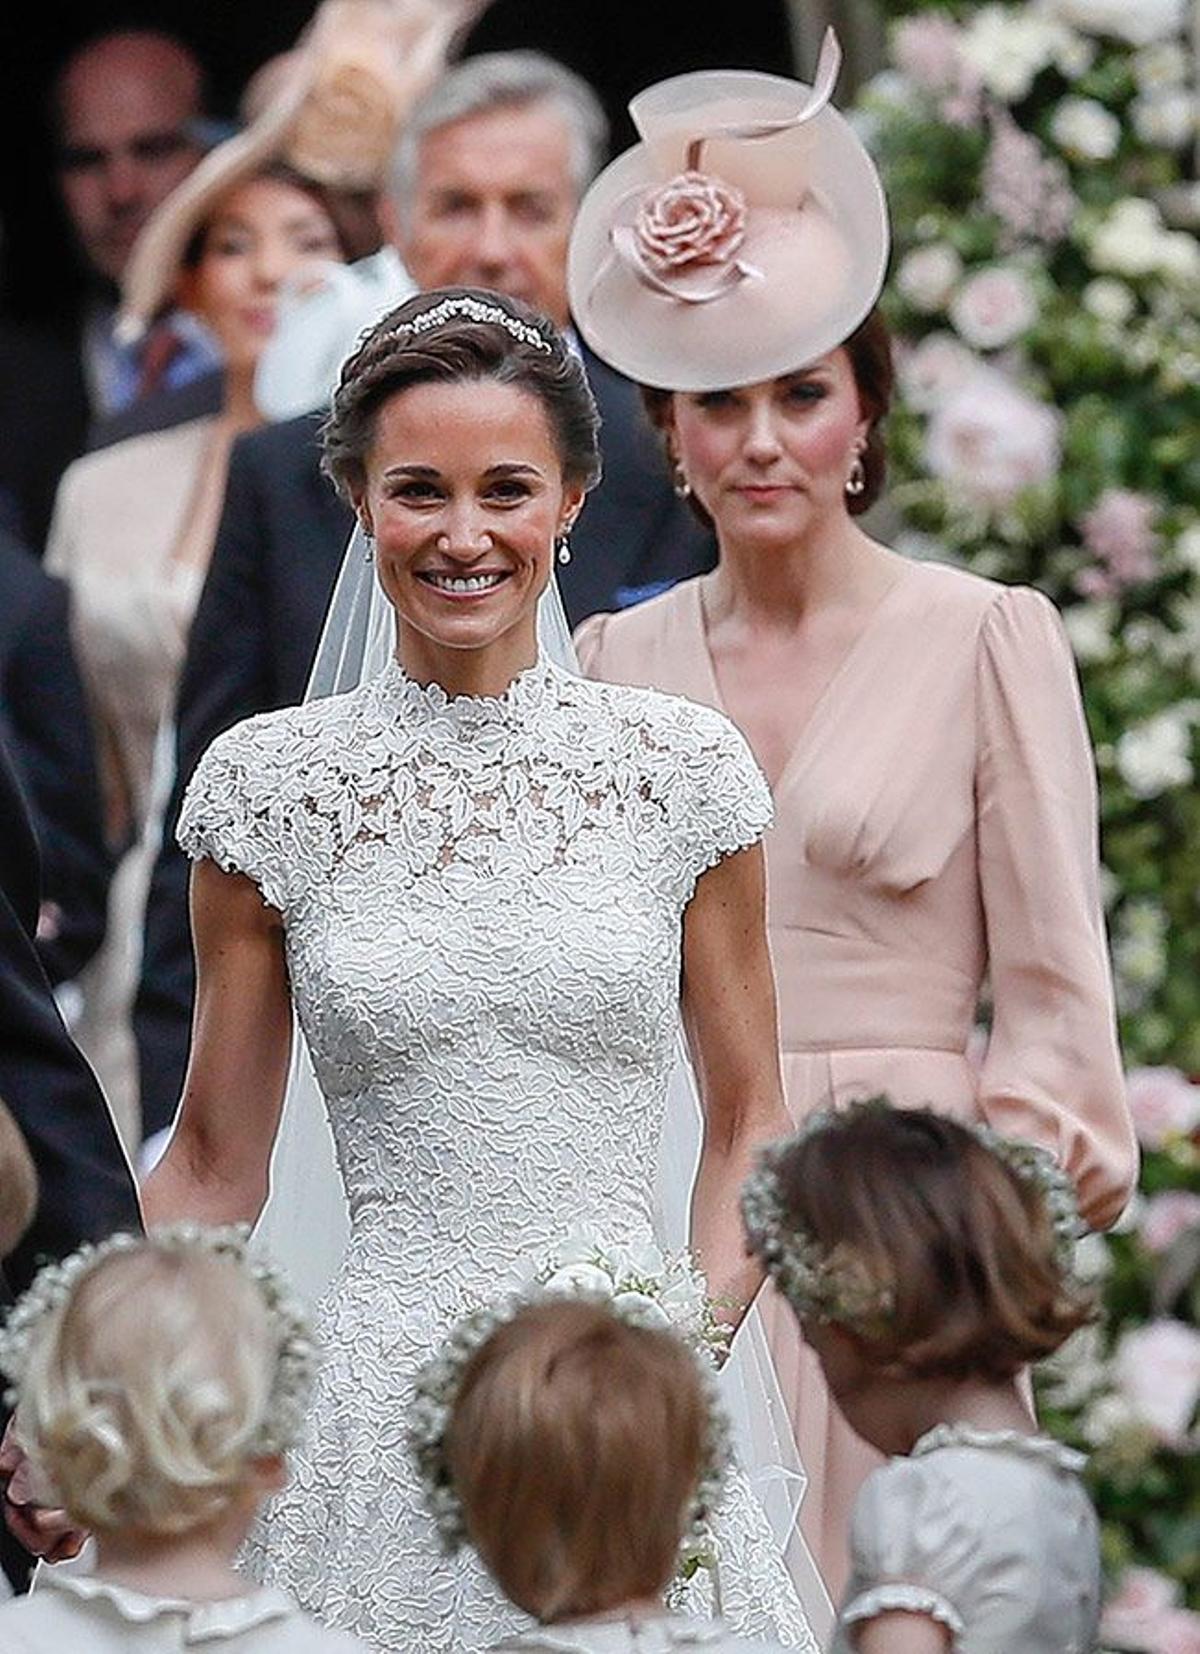 Boda de Pippa Middleton: Pippa vestida de novia y su hermana Kate